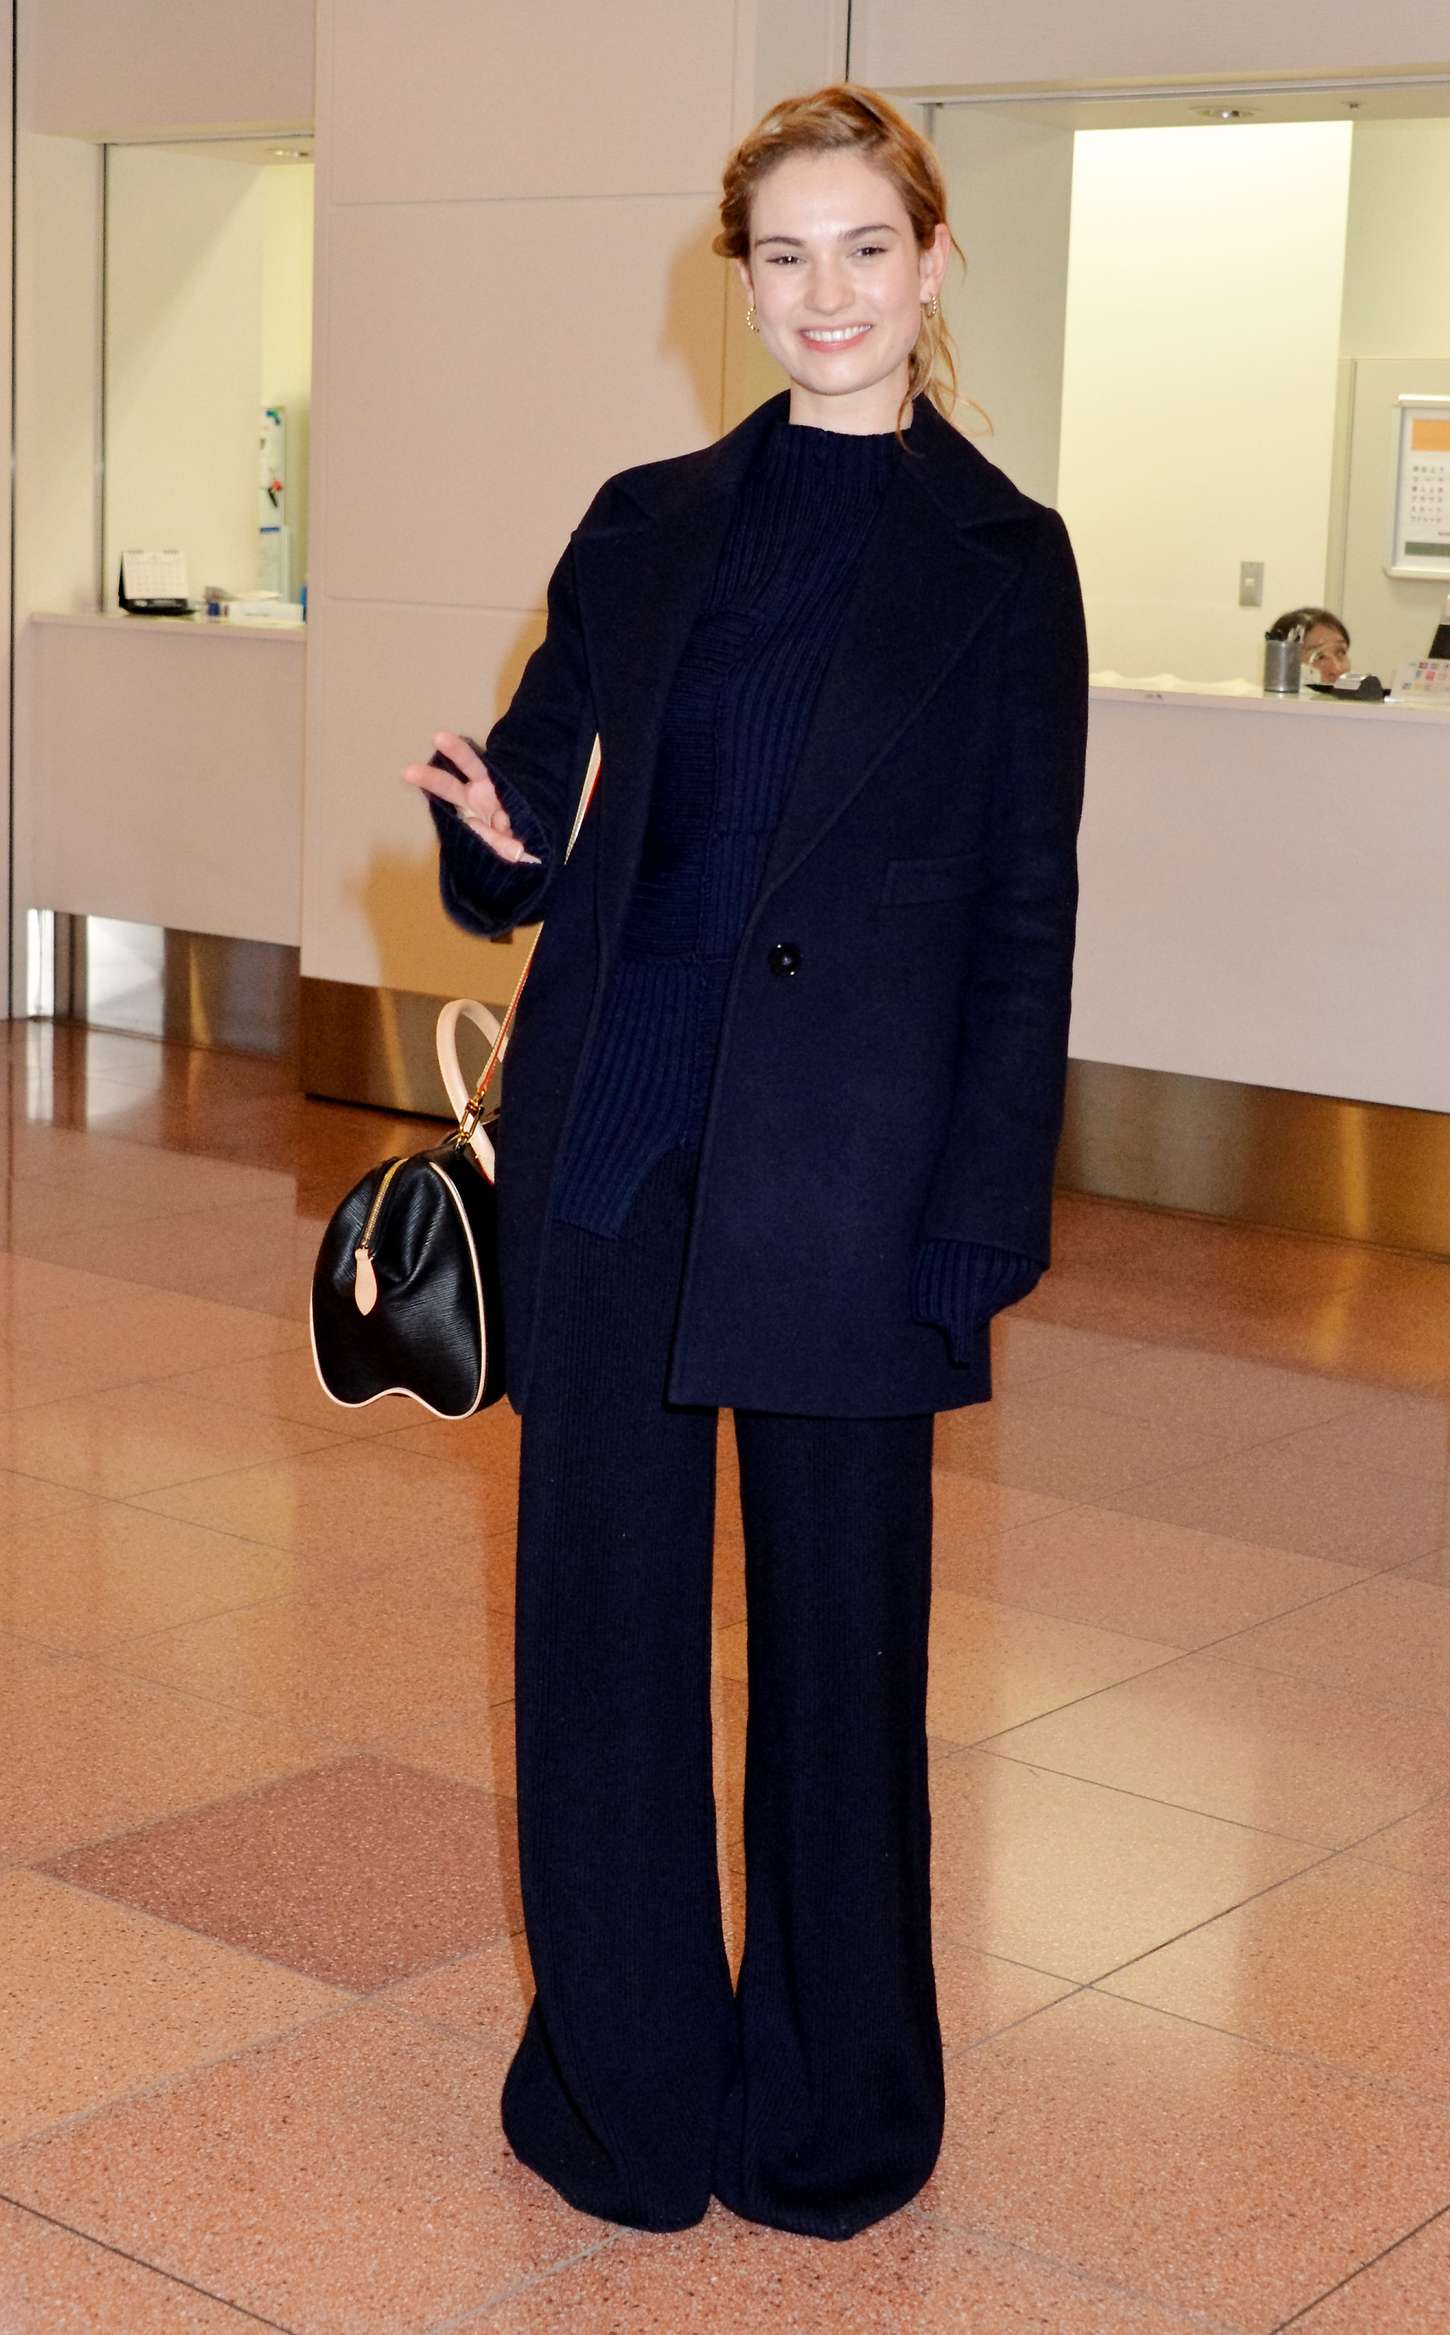 Lily James - Arriving at Haneda International Airport in Tokyo